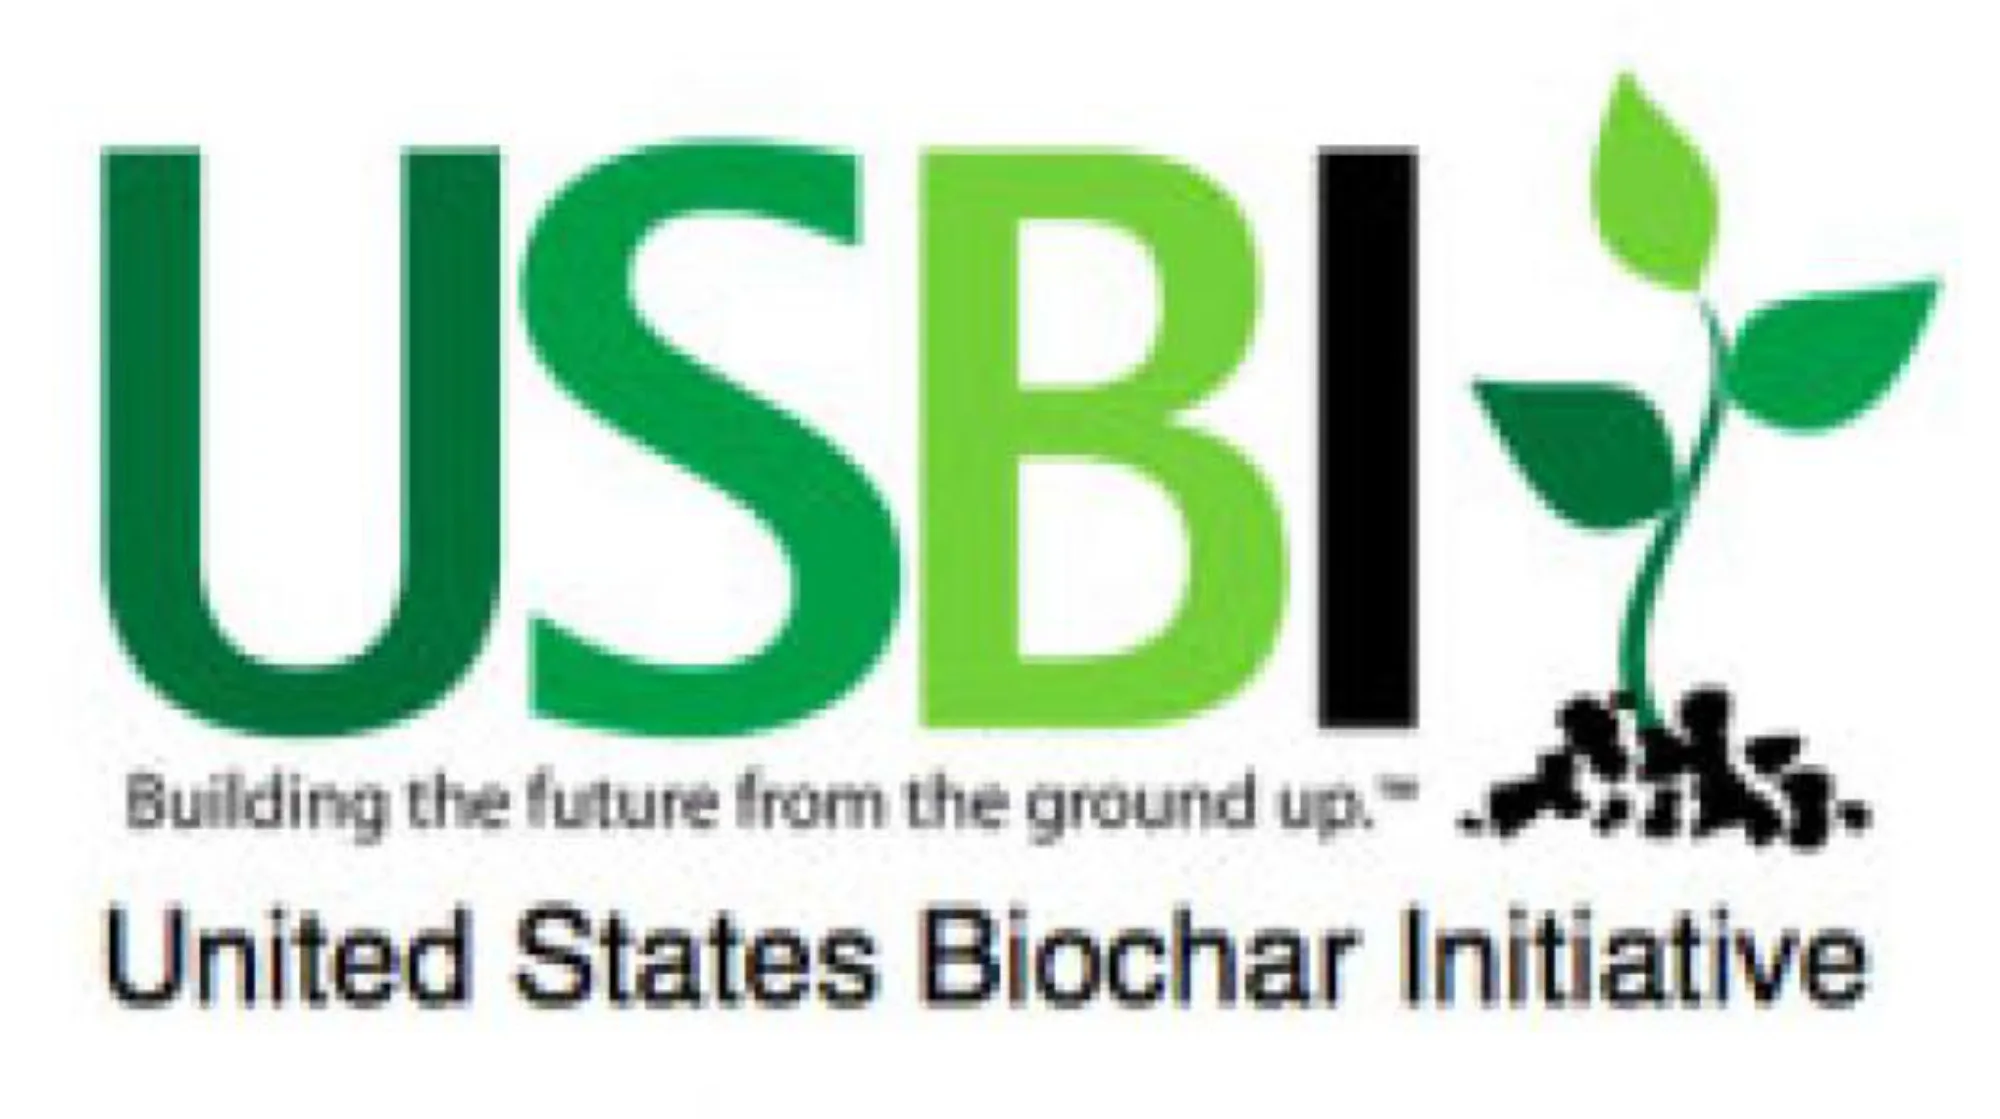 United States Biochar Initiative USBI logo